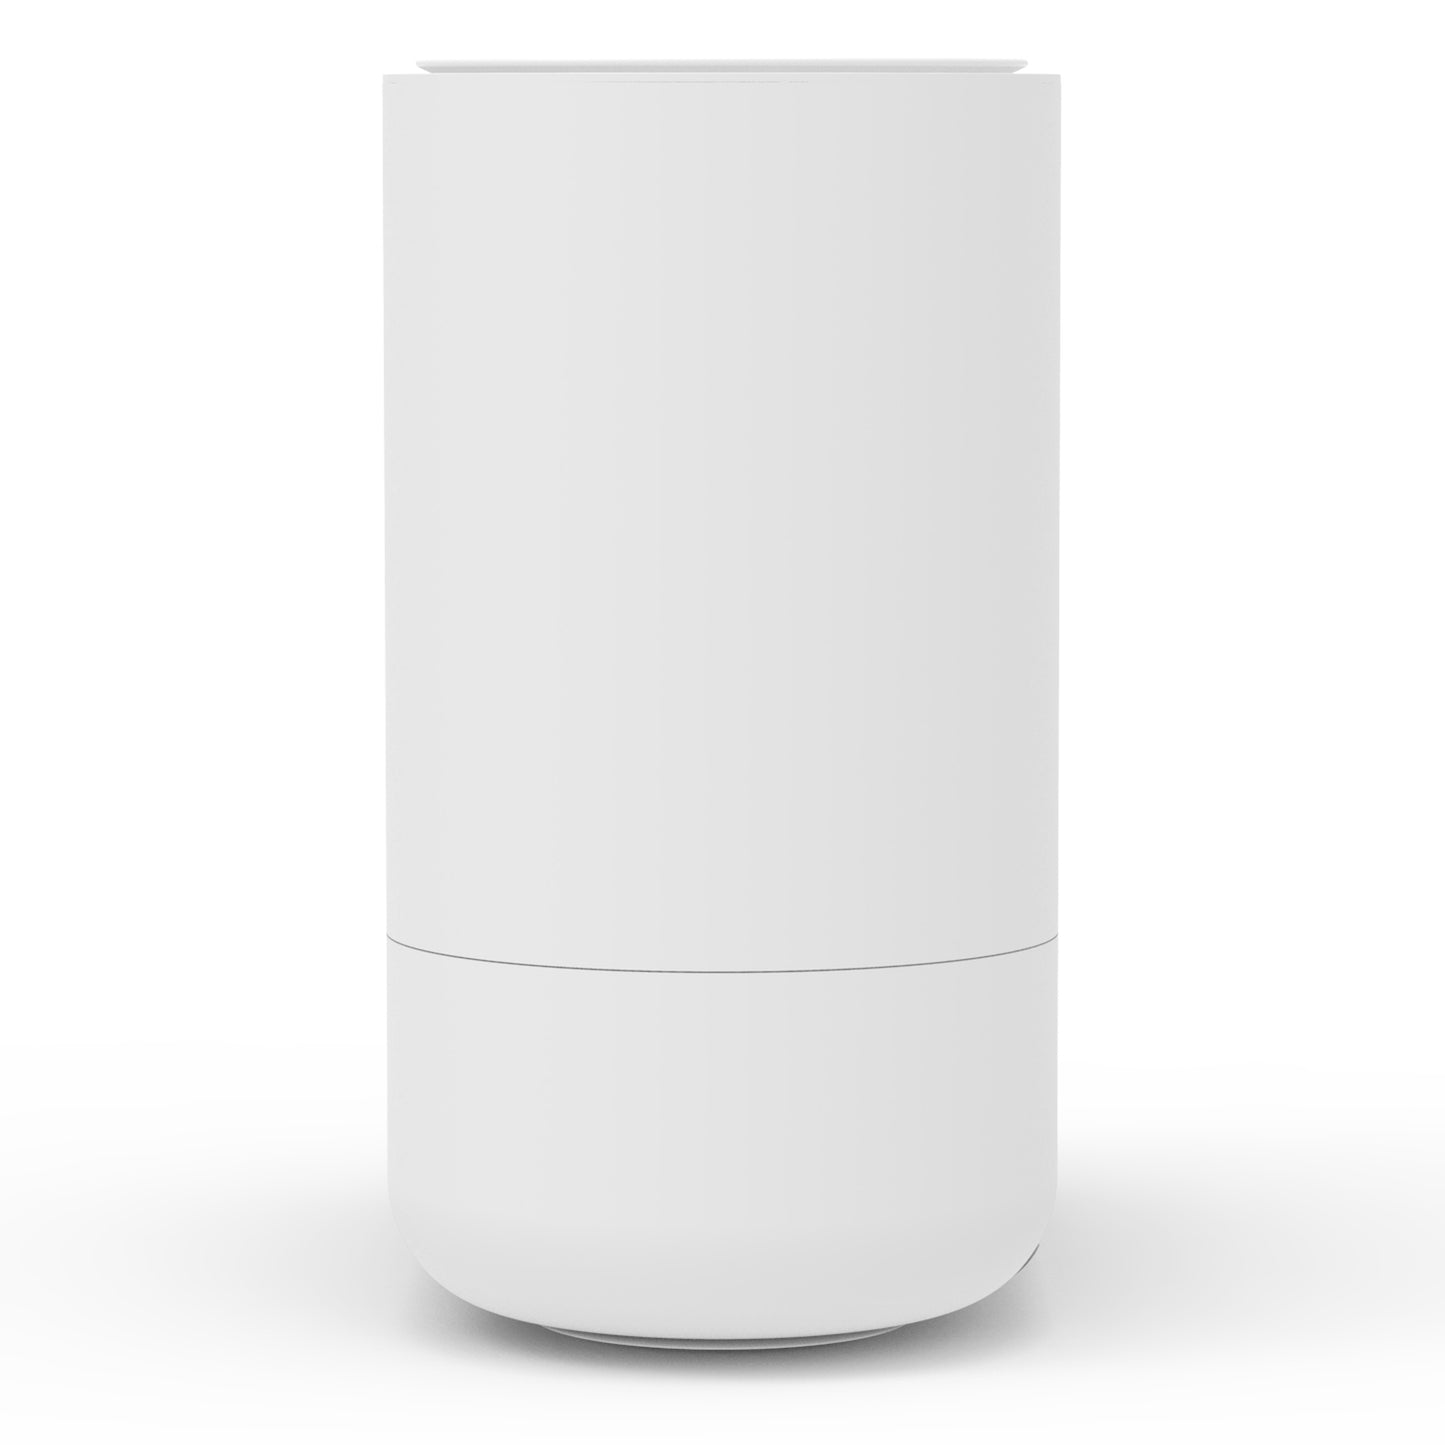 Trebs 49300 - Smart humidifier - White